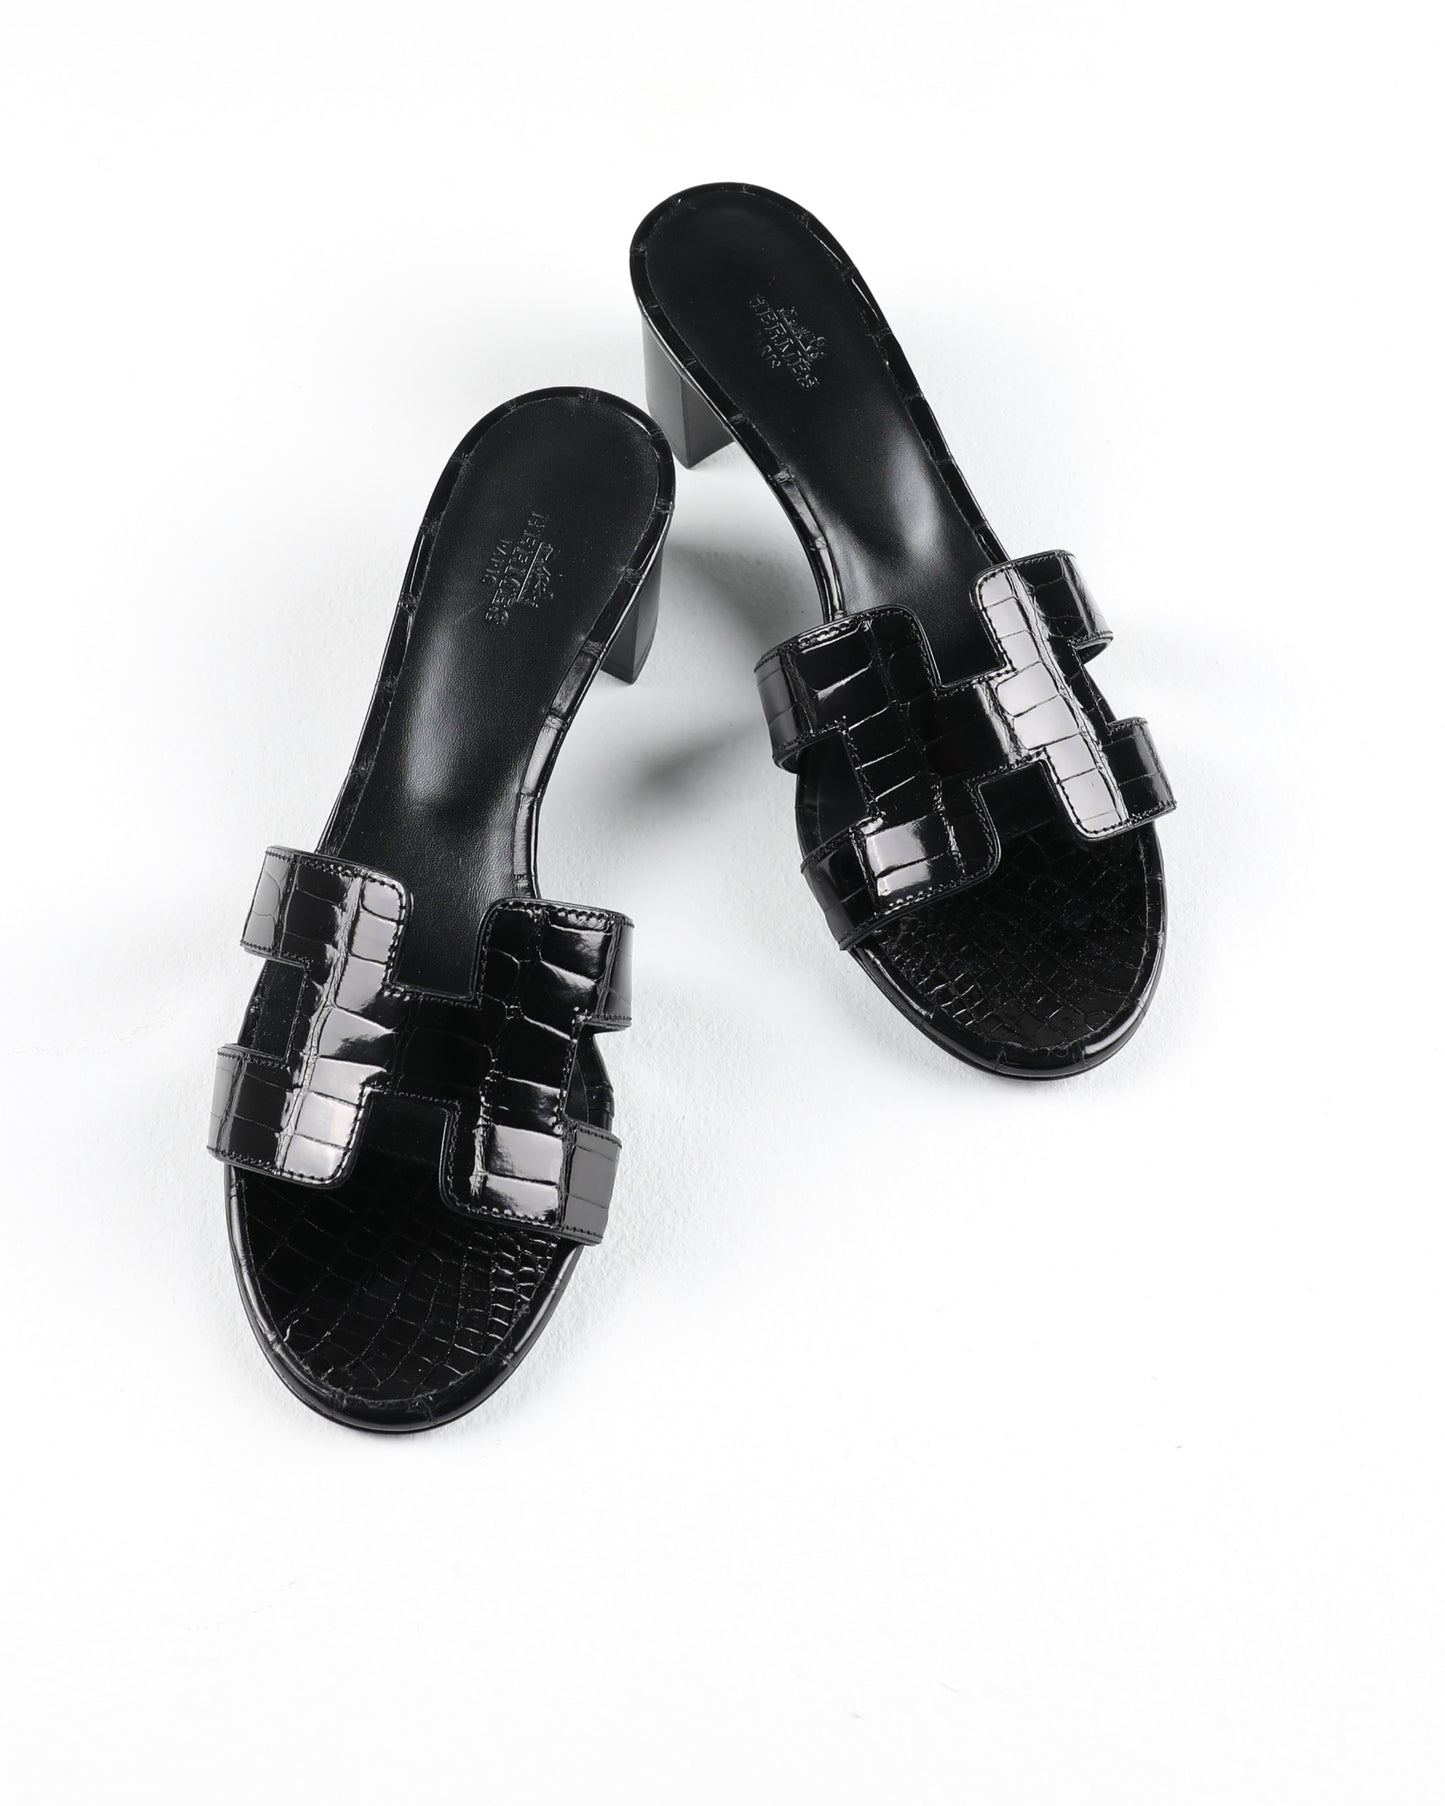 Oasis Sandal in Black Crocodile Leather